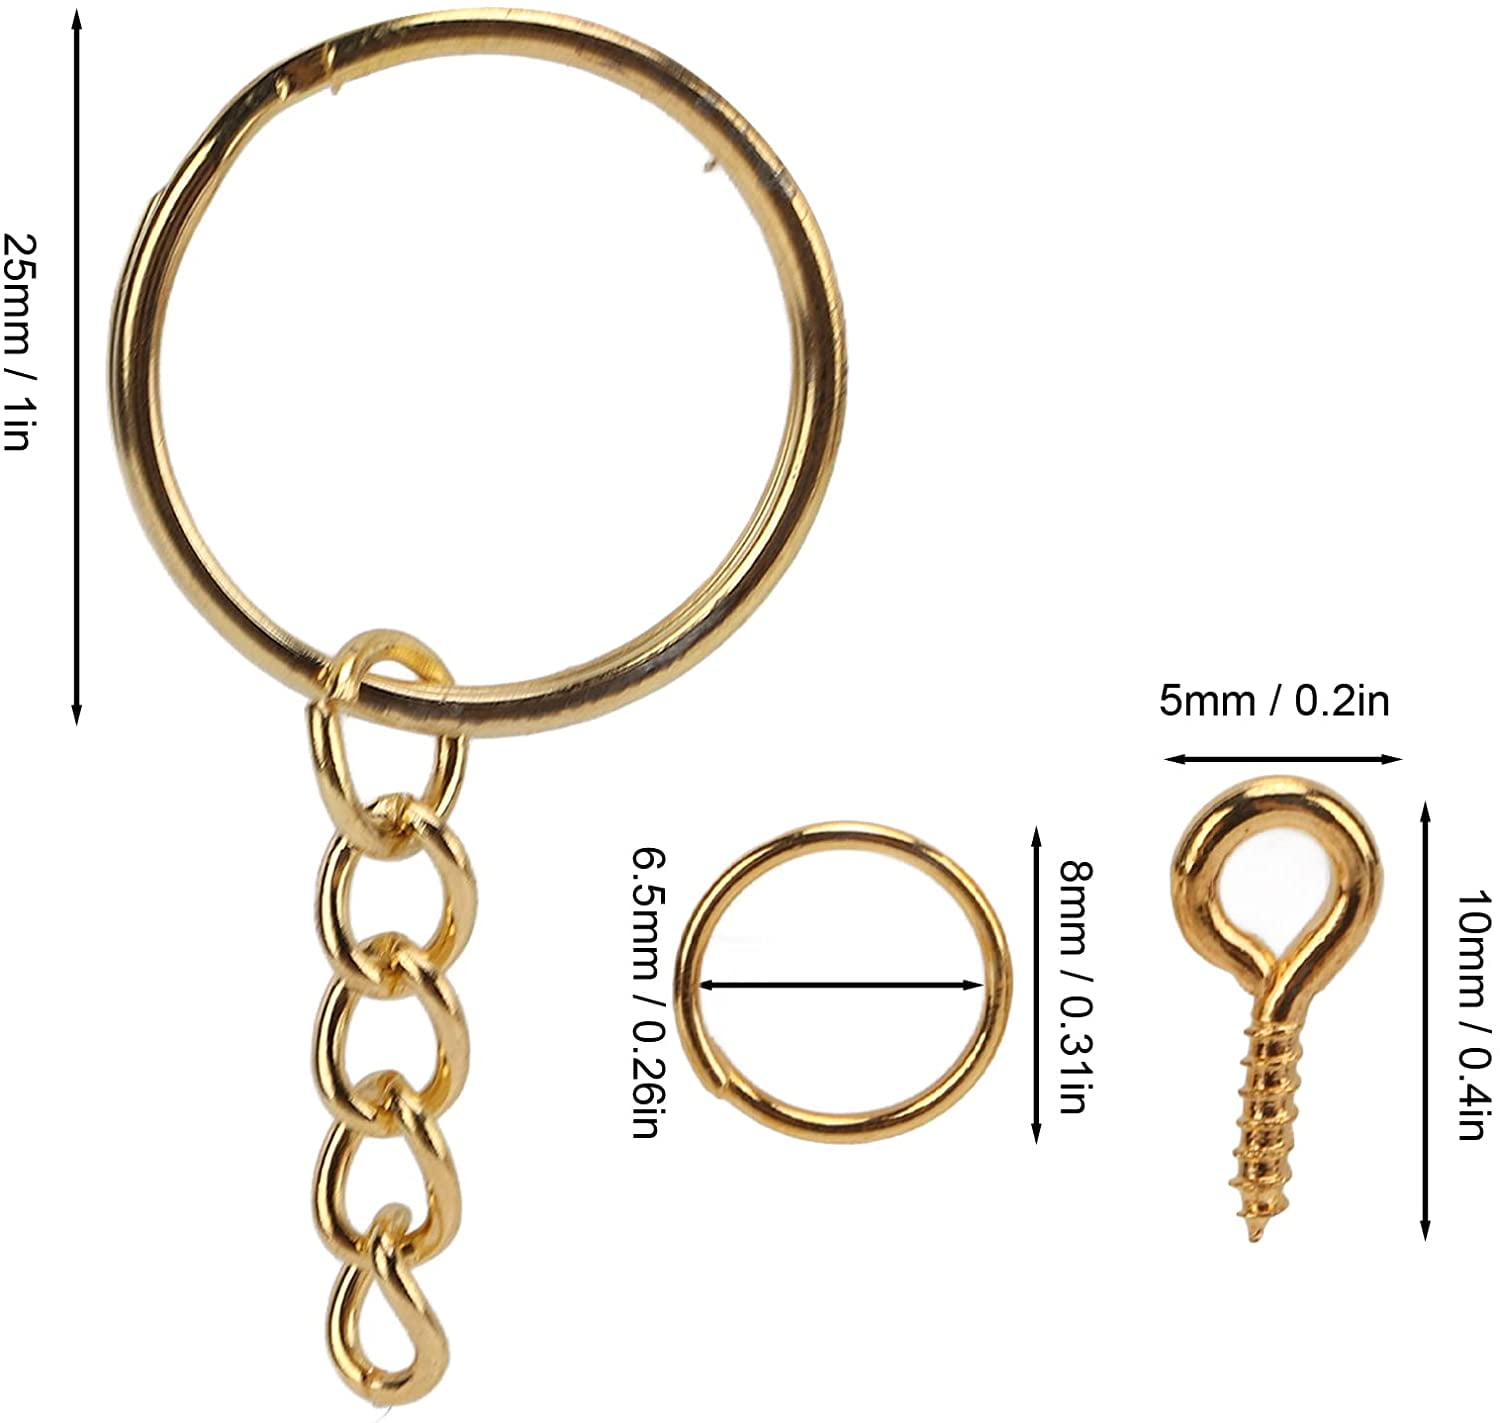 wholesale key fitting metal heart shape| Alibaba.com